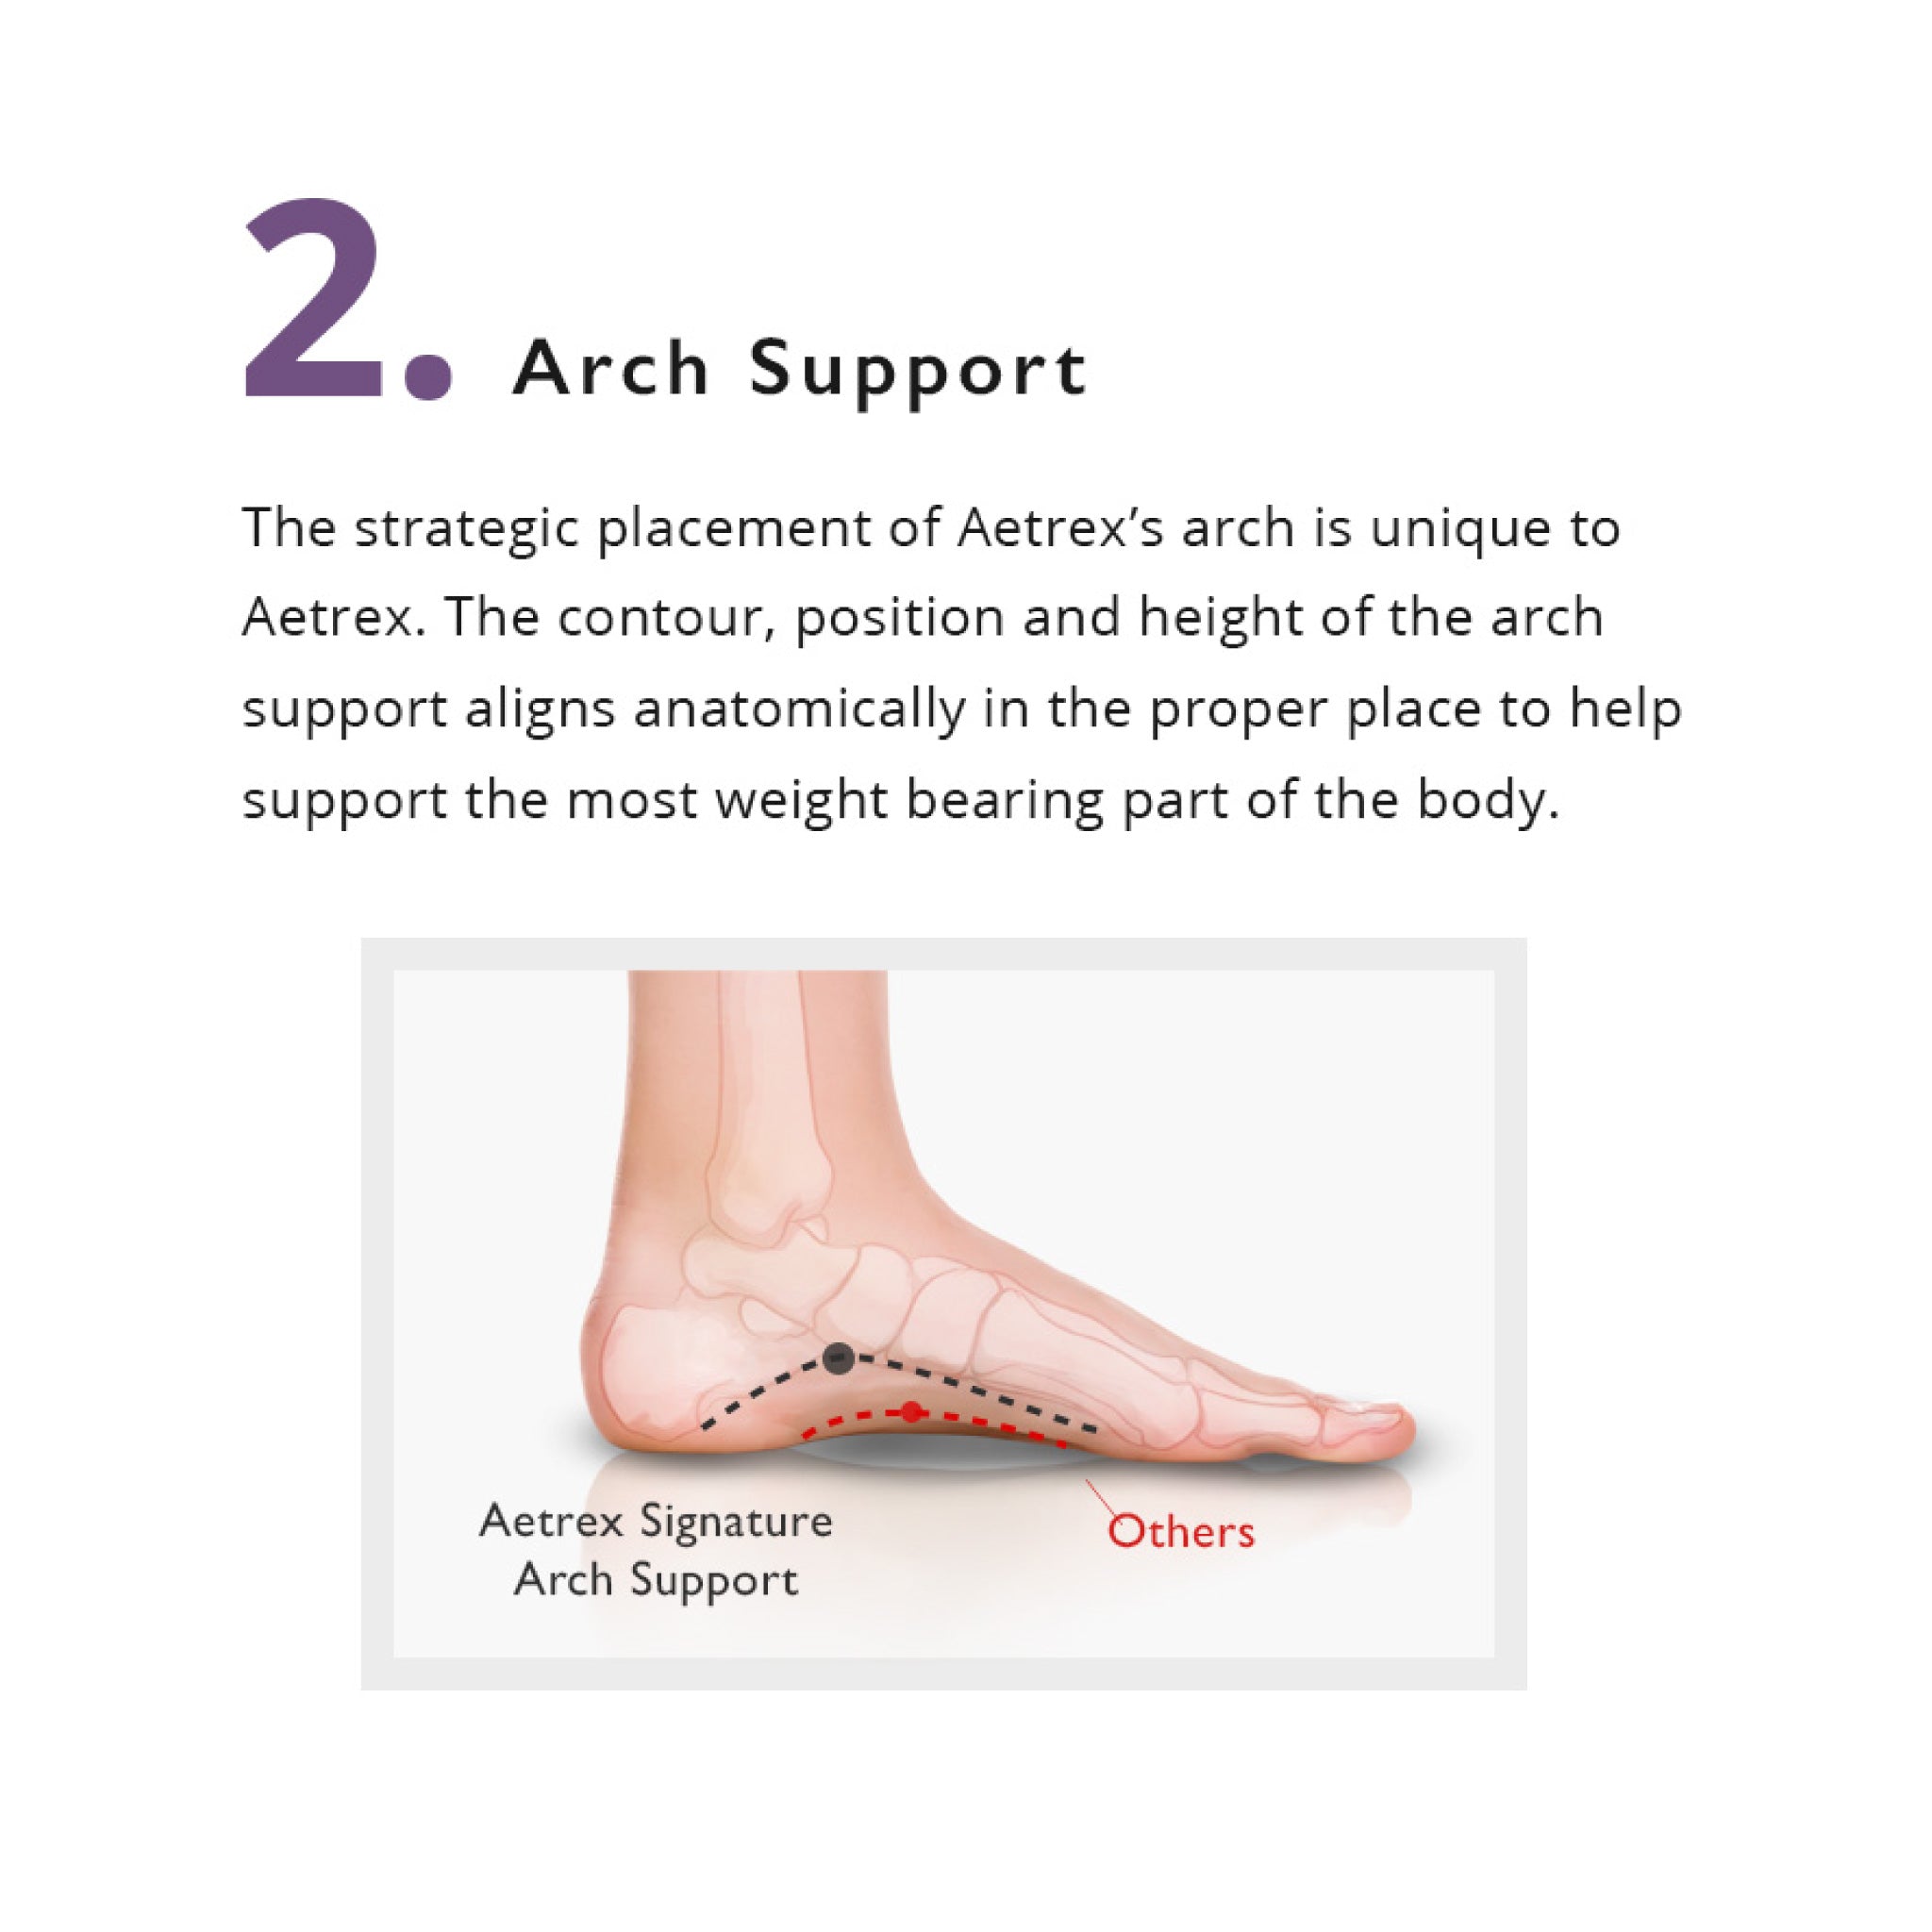 Aetrex | Women's Memory Foam Orthotics L2220W (Flat/Low Arch)